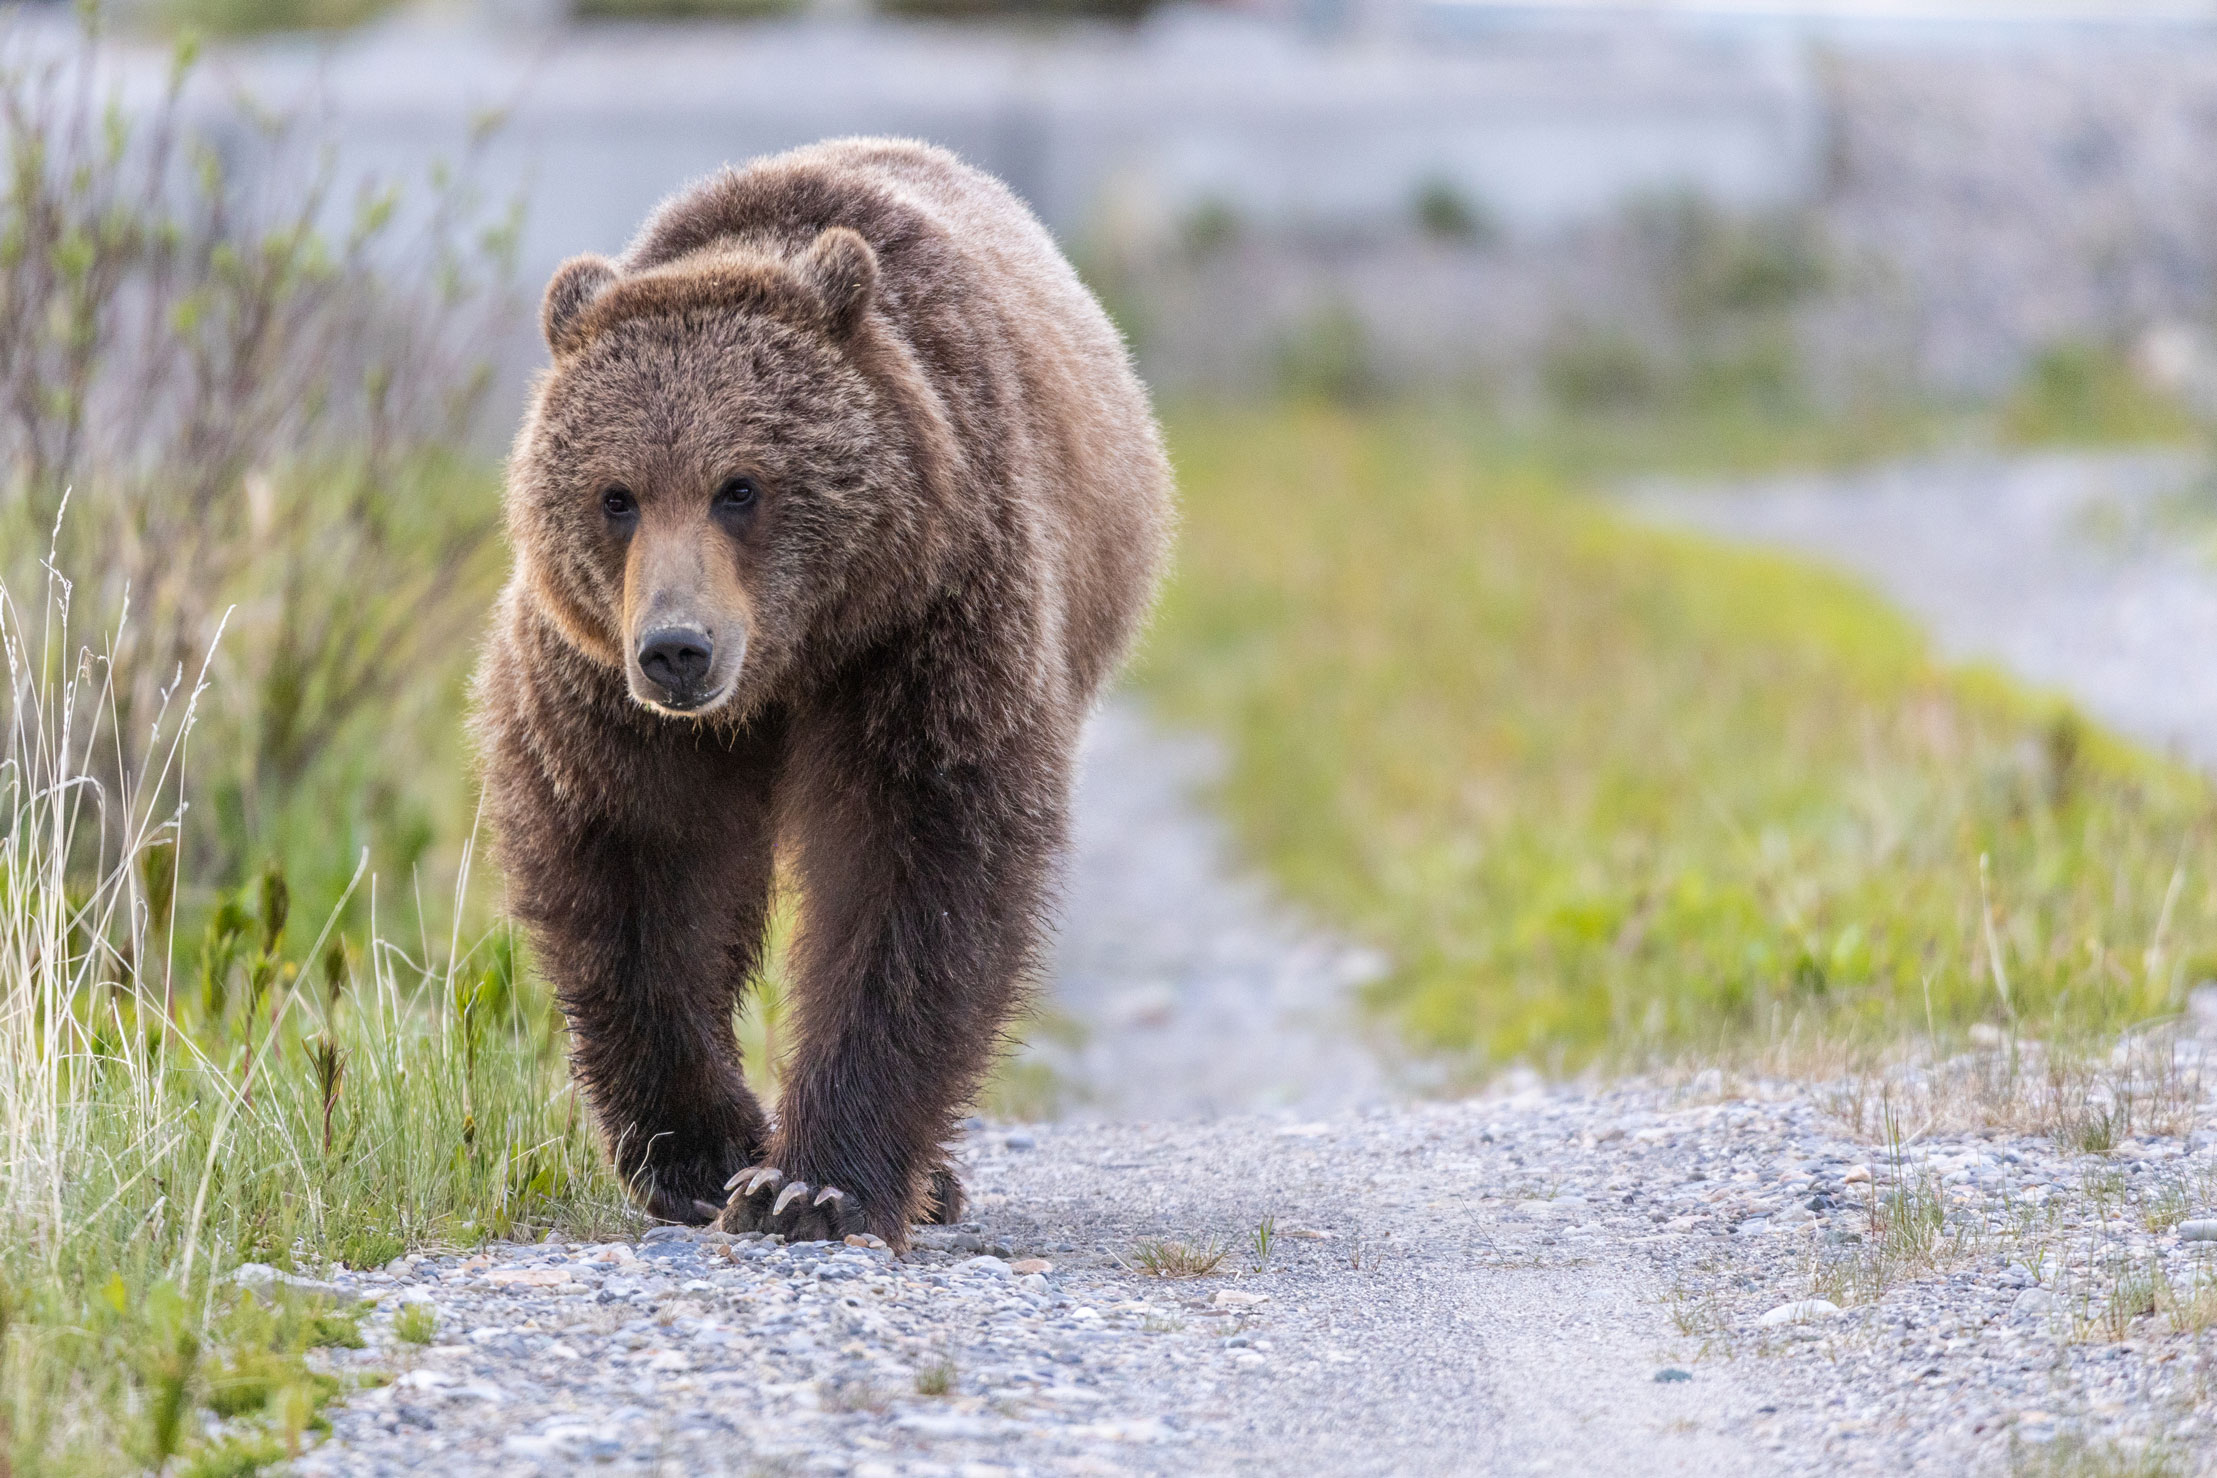 A grizzly bear walks along a trail